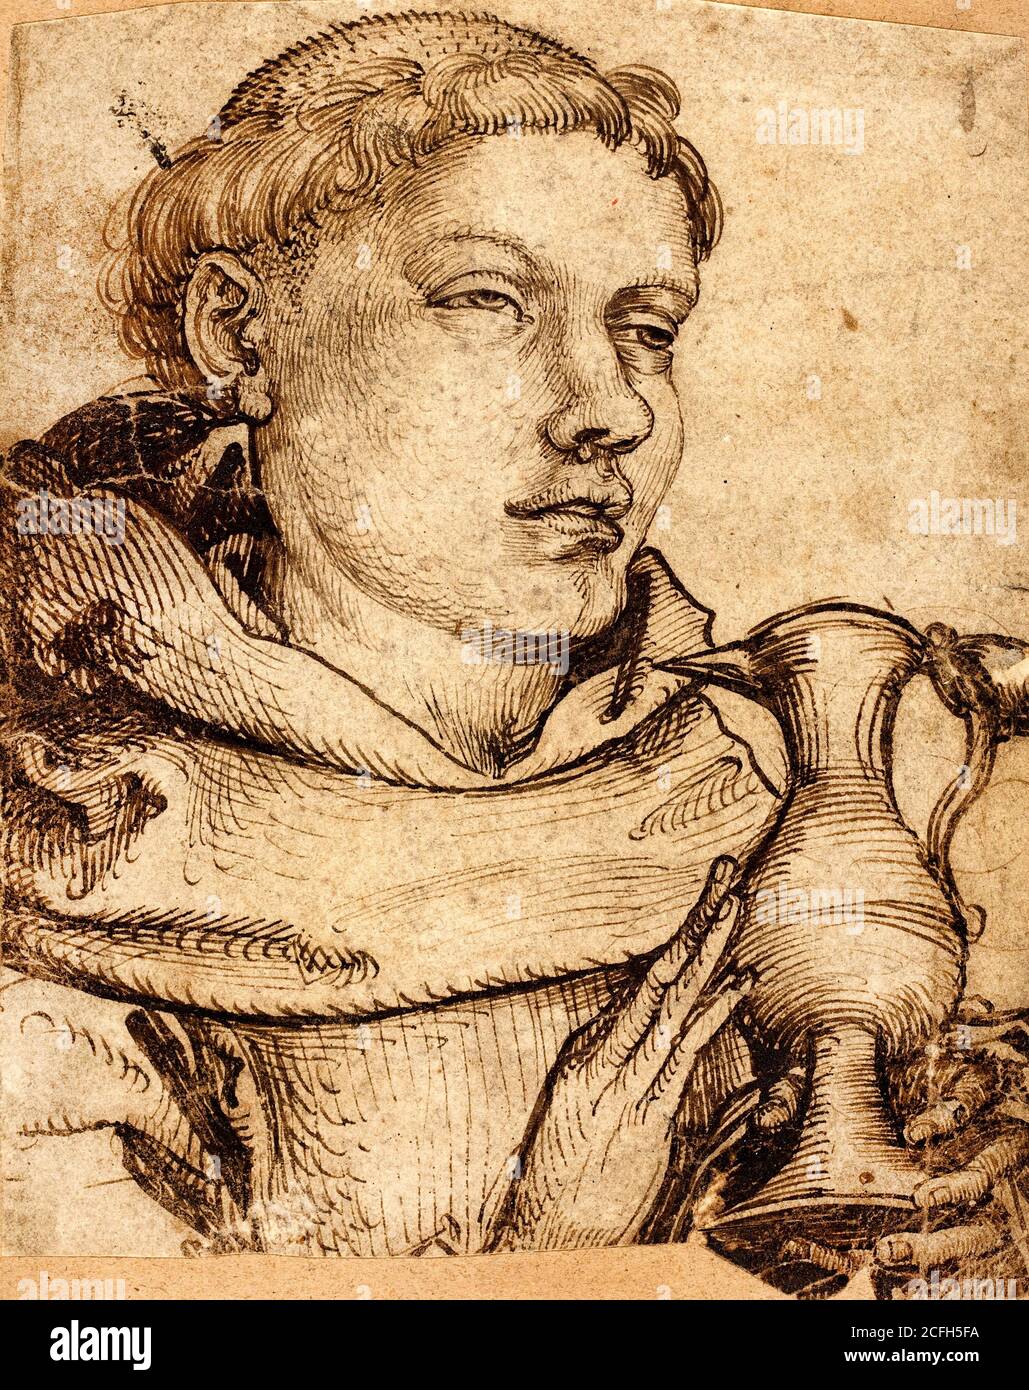 Martin Schongauerett, Bust of a Monk ayudando a la Comunión, 1450 - 1491, tinta marrón y pluma en papel, National Gallery of Art, Washington, D.C., Foto de stock